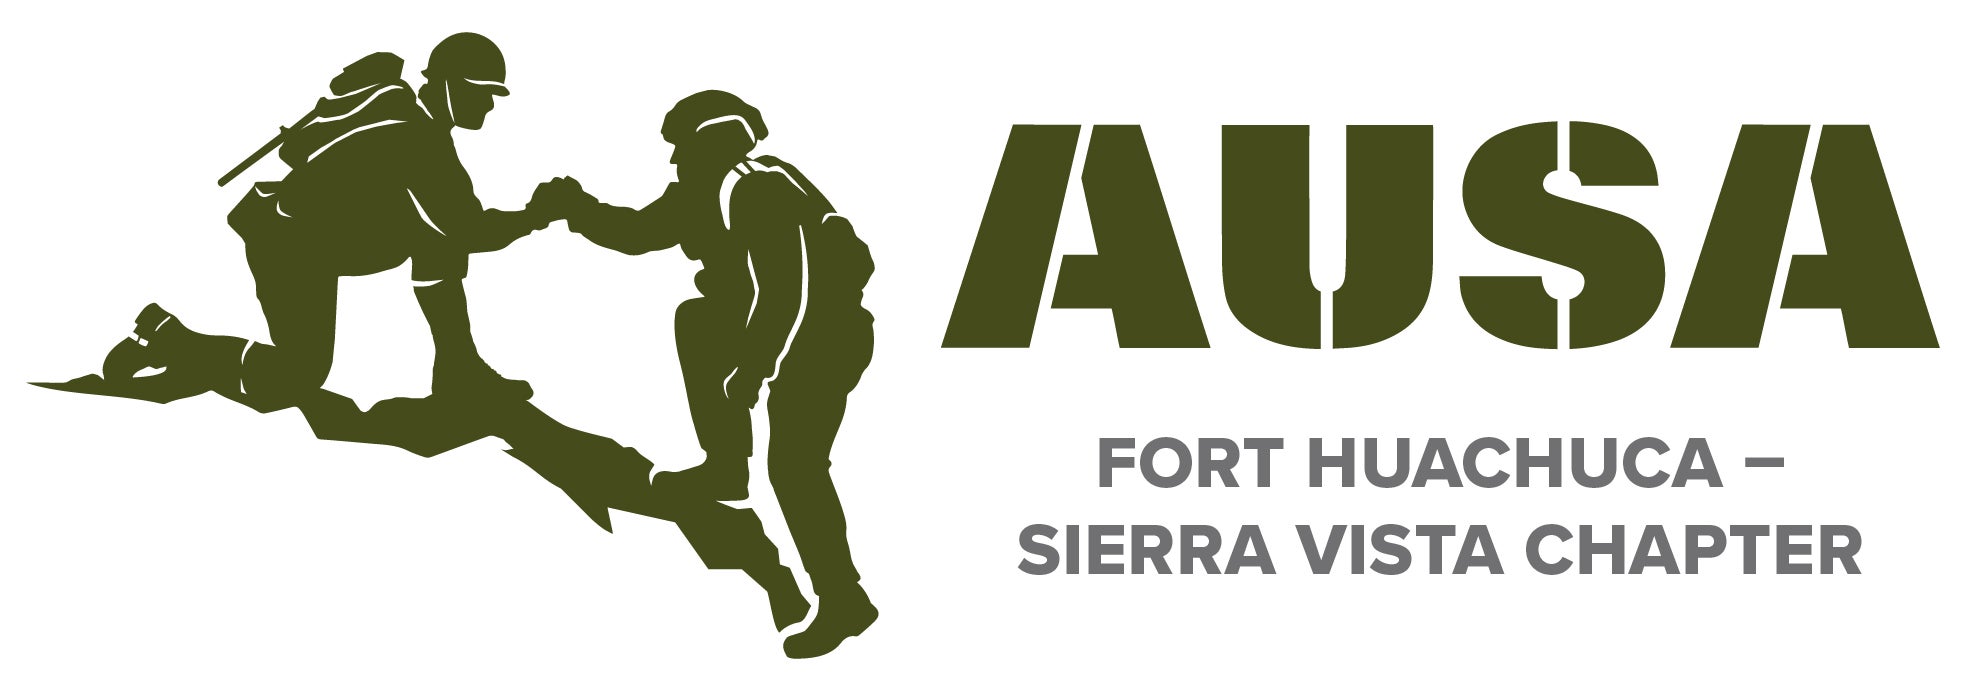 Fort Huachuca-Sierra Vista Chapter